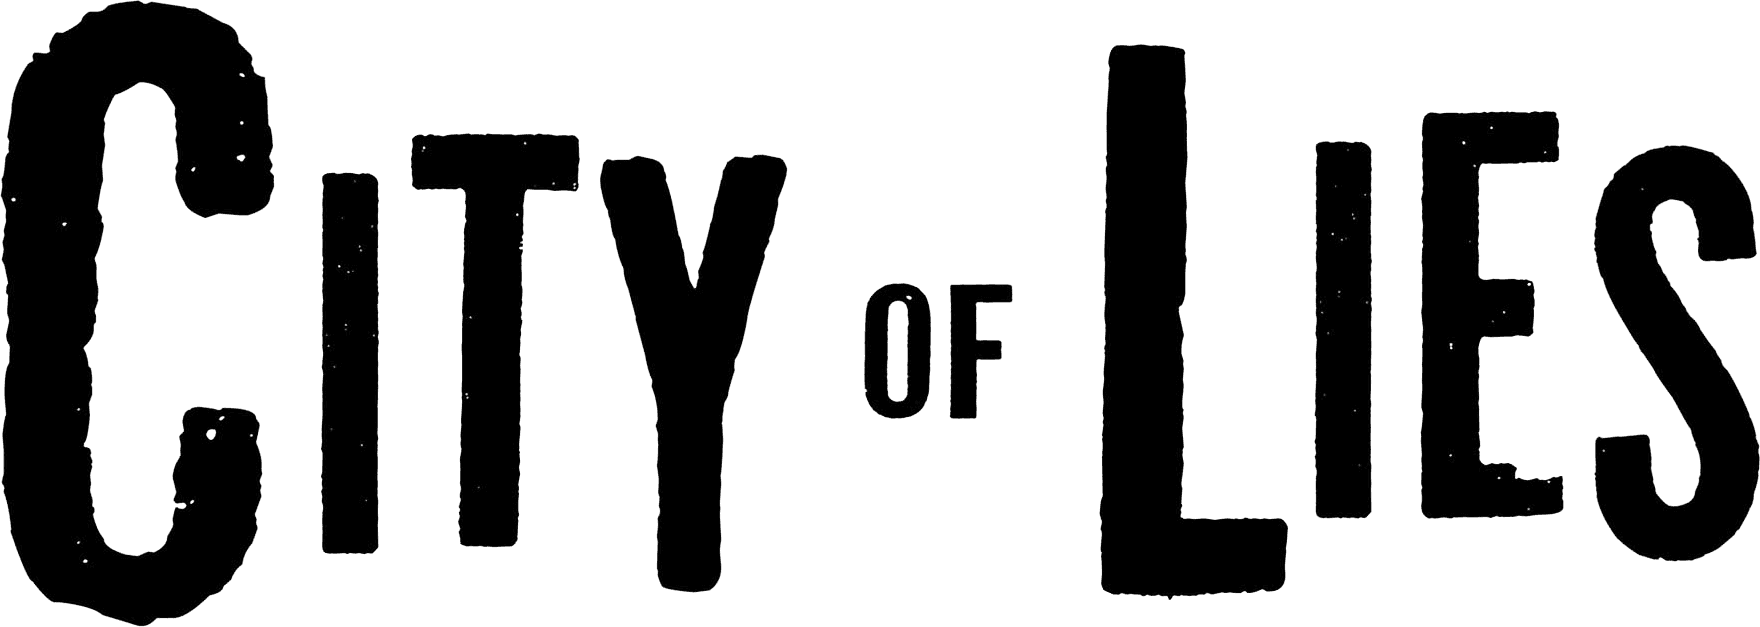 City of Lies logo